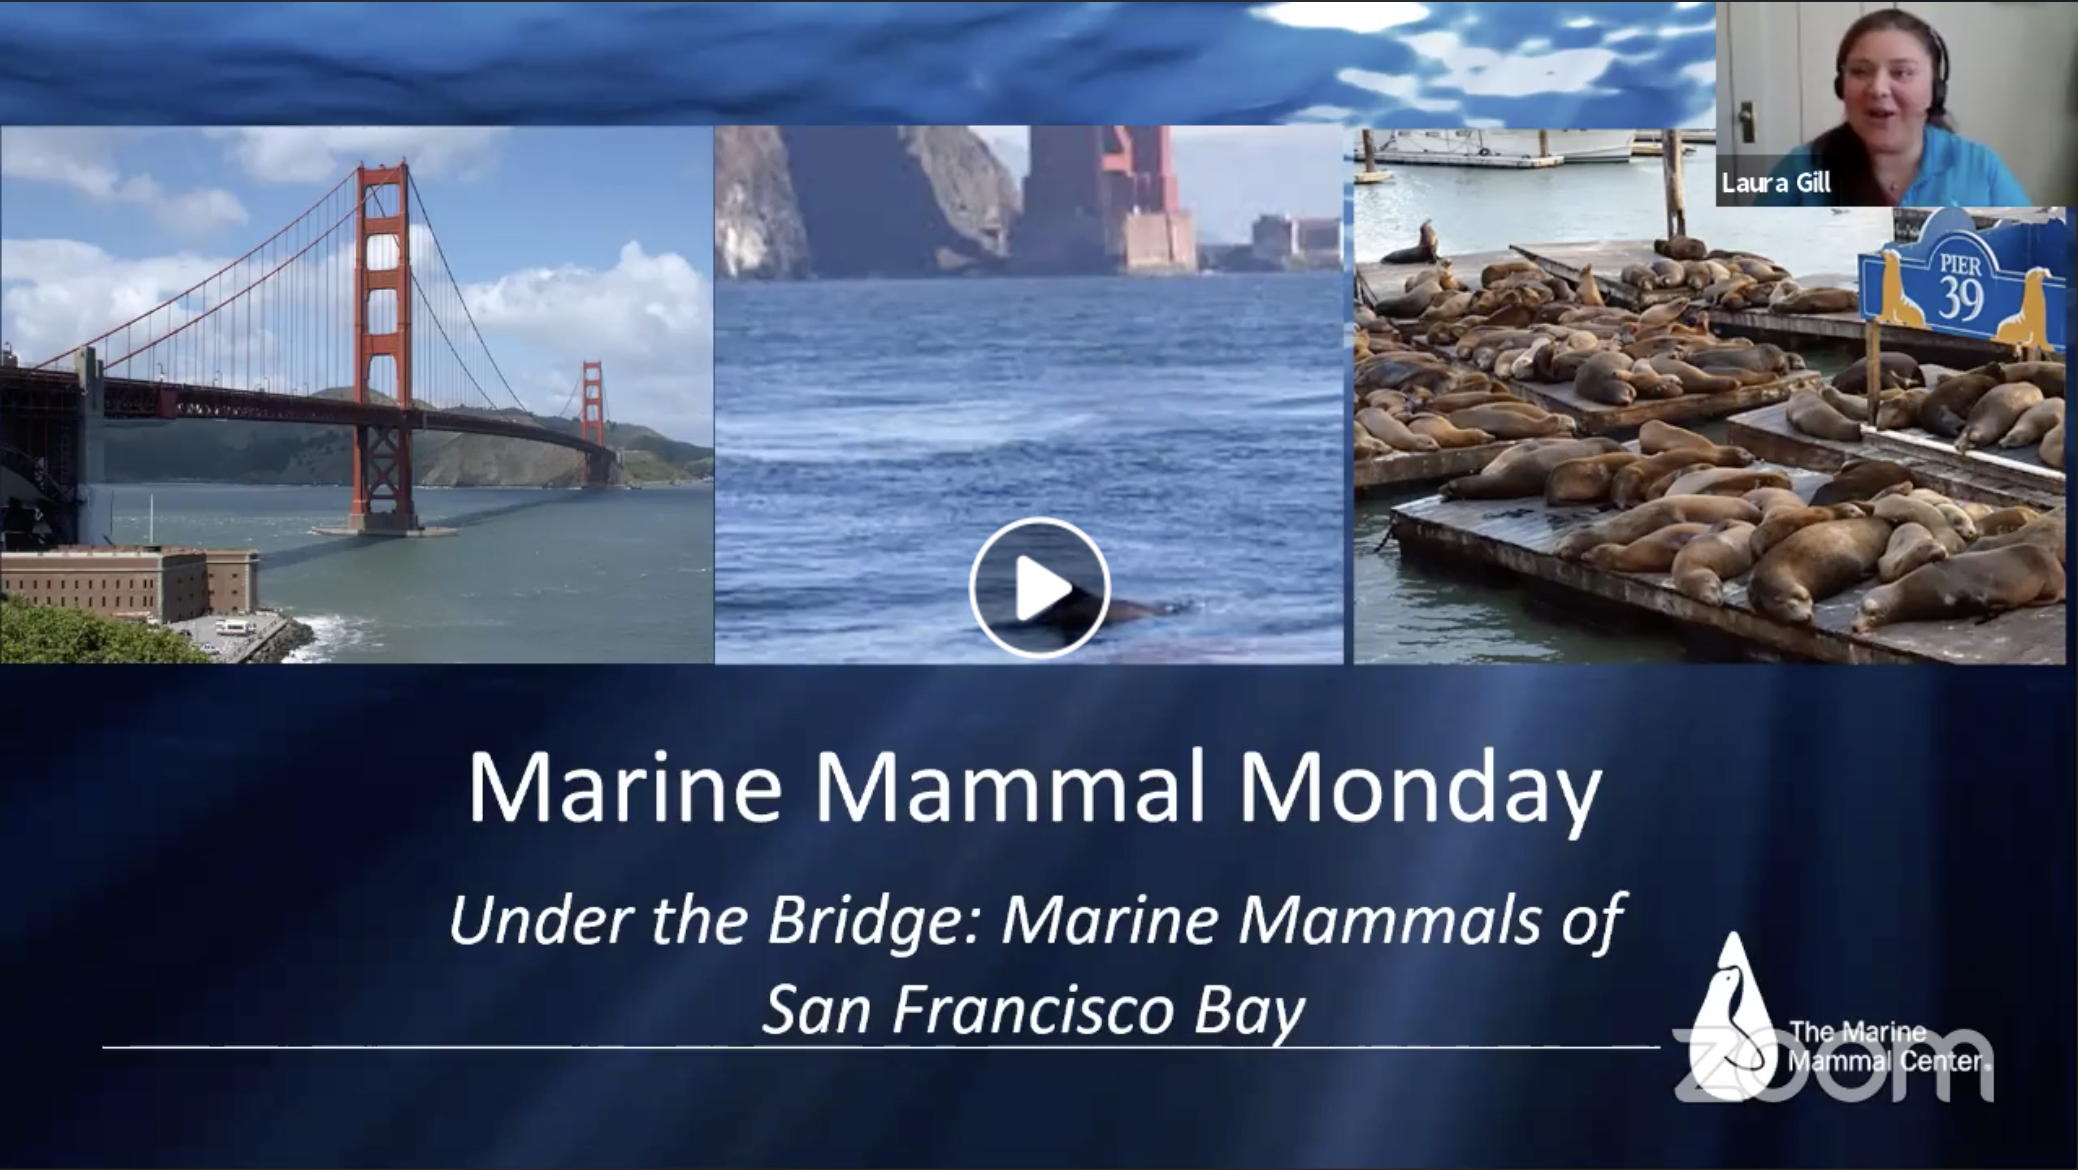 Marine Mammals of the San Francisco Bay